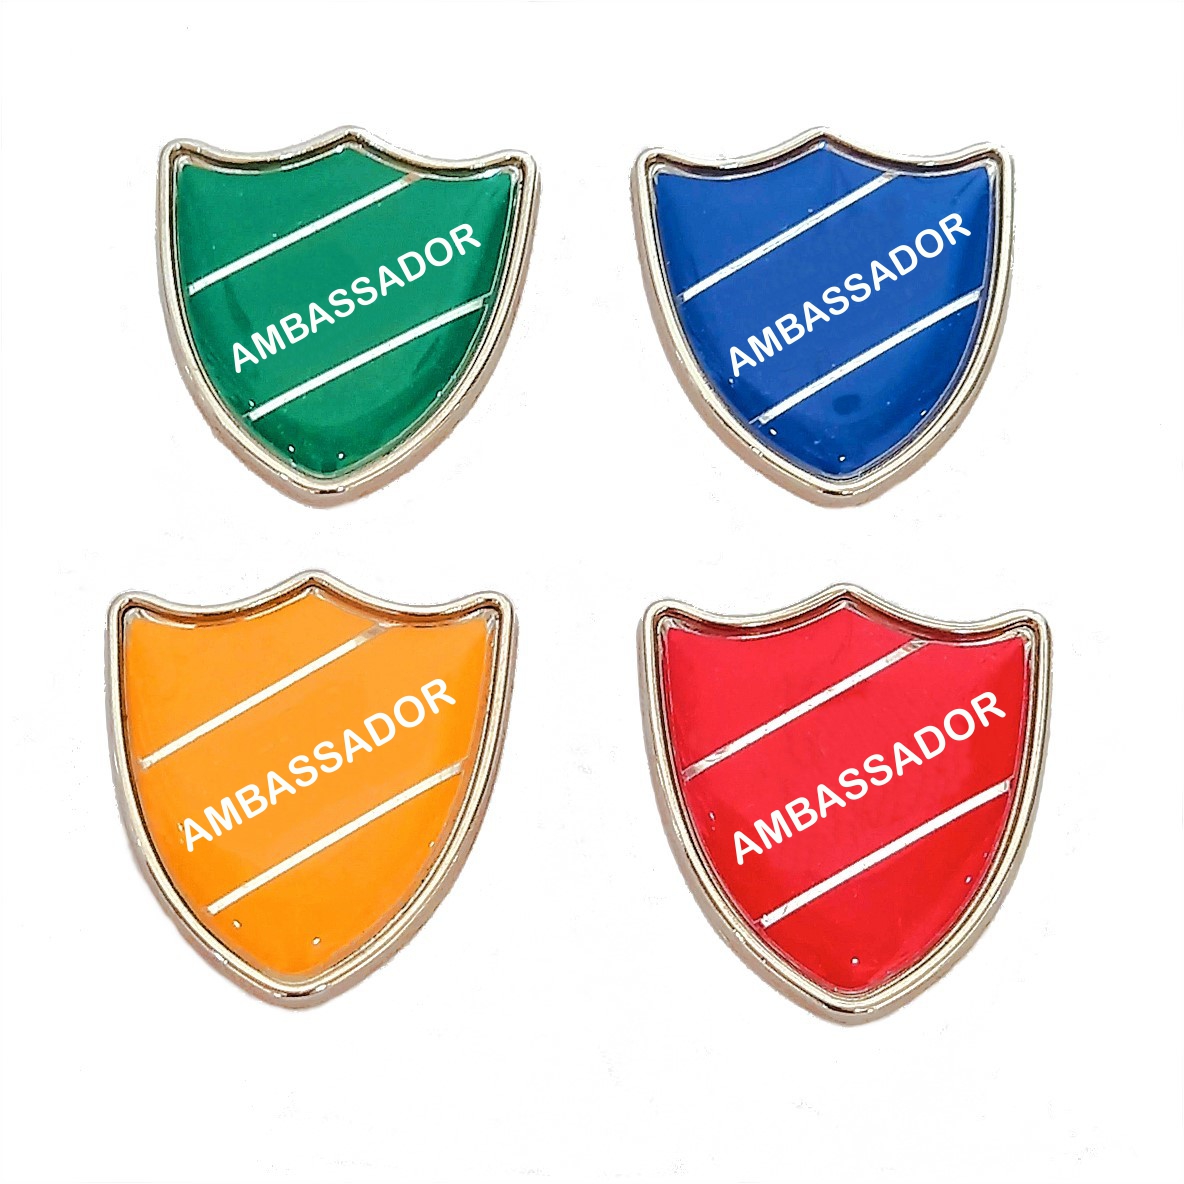 AMBASSADOR shield badge